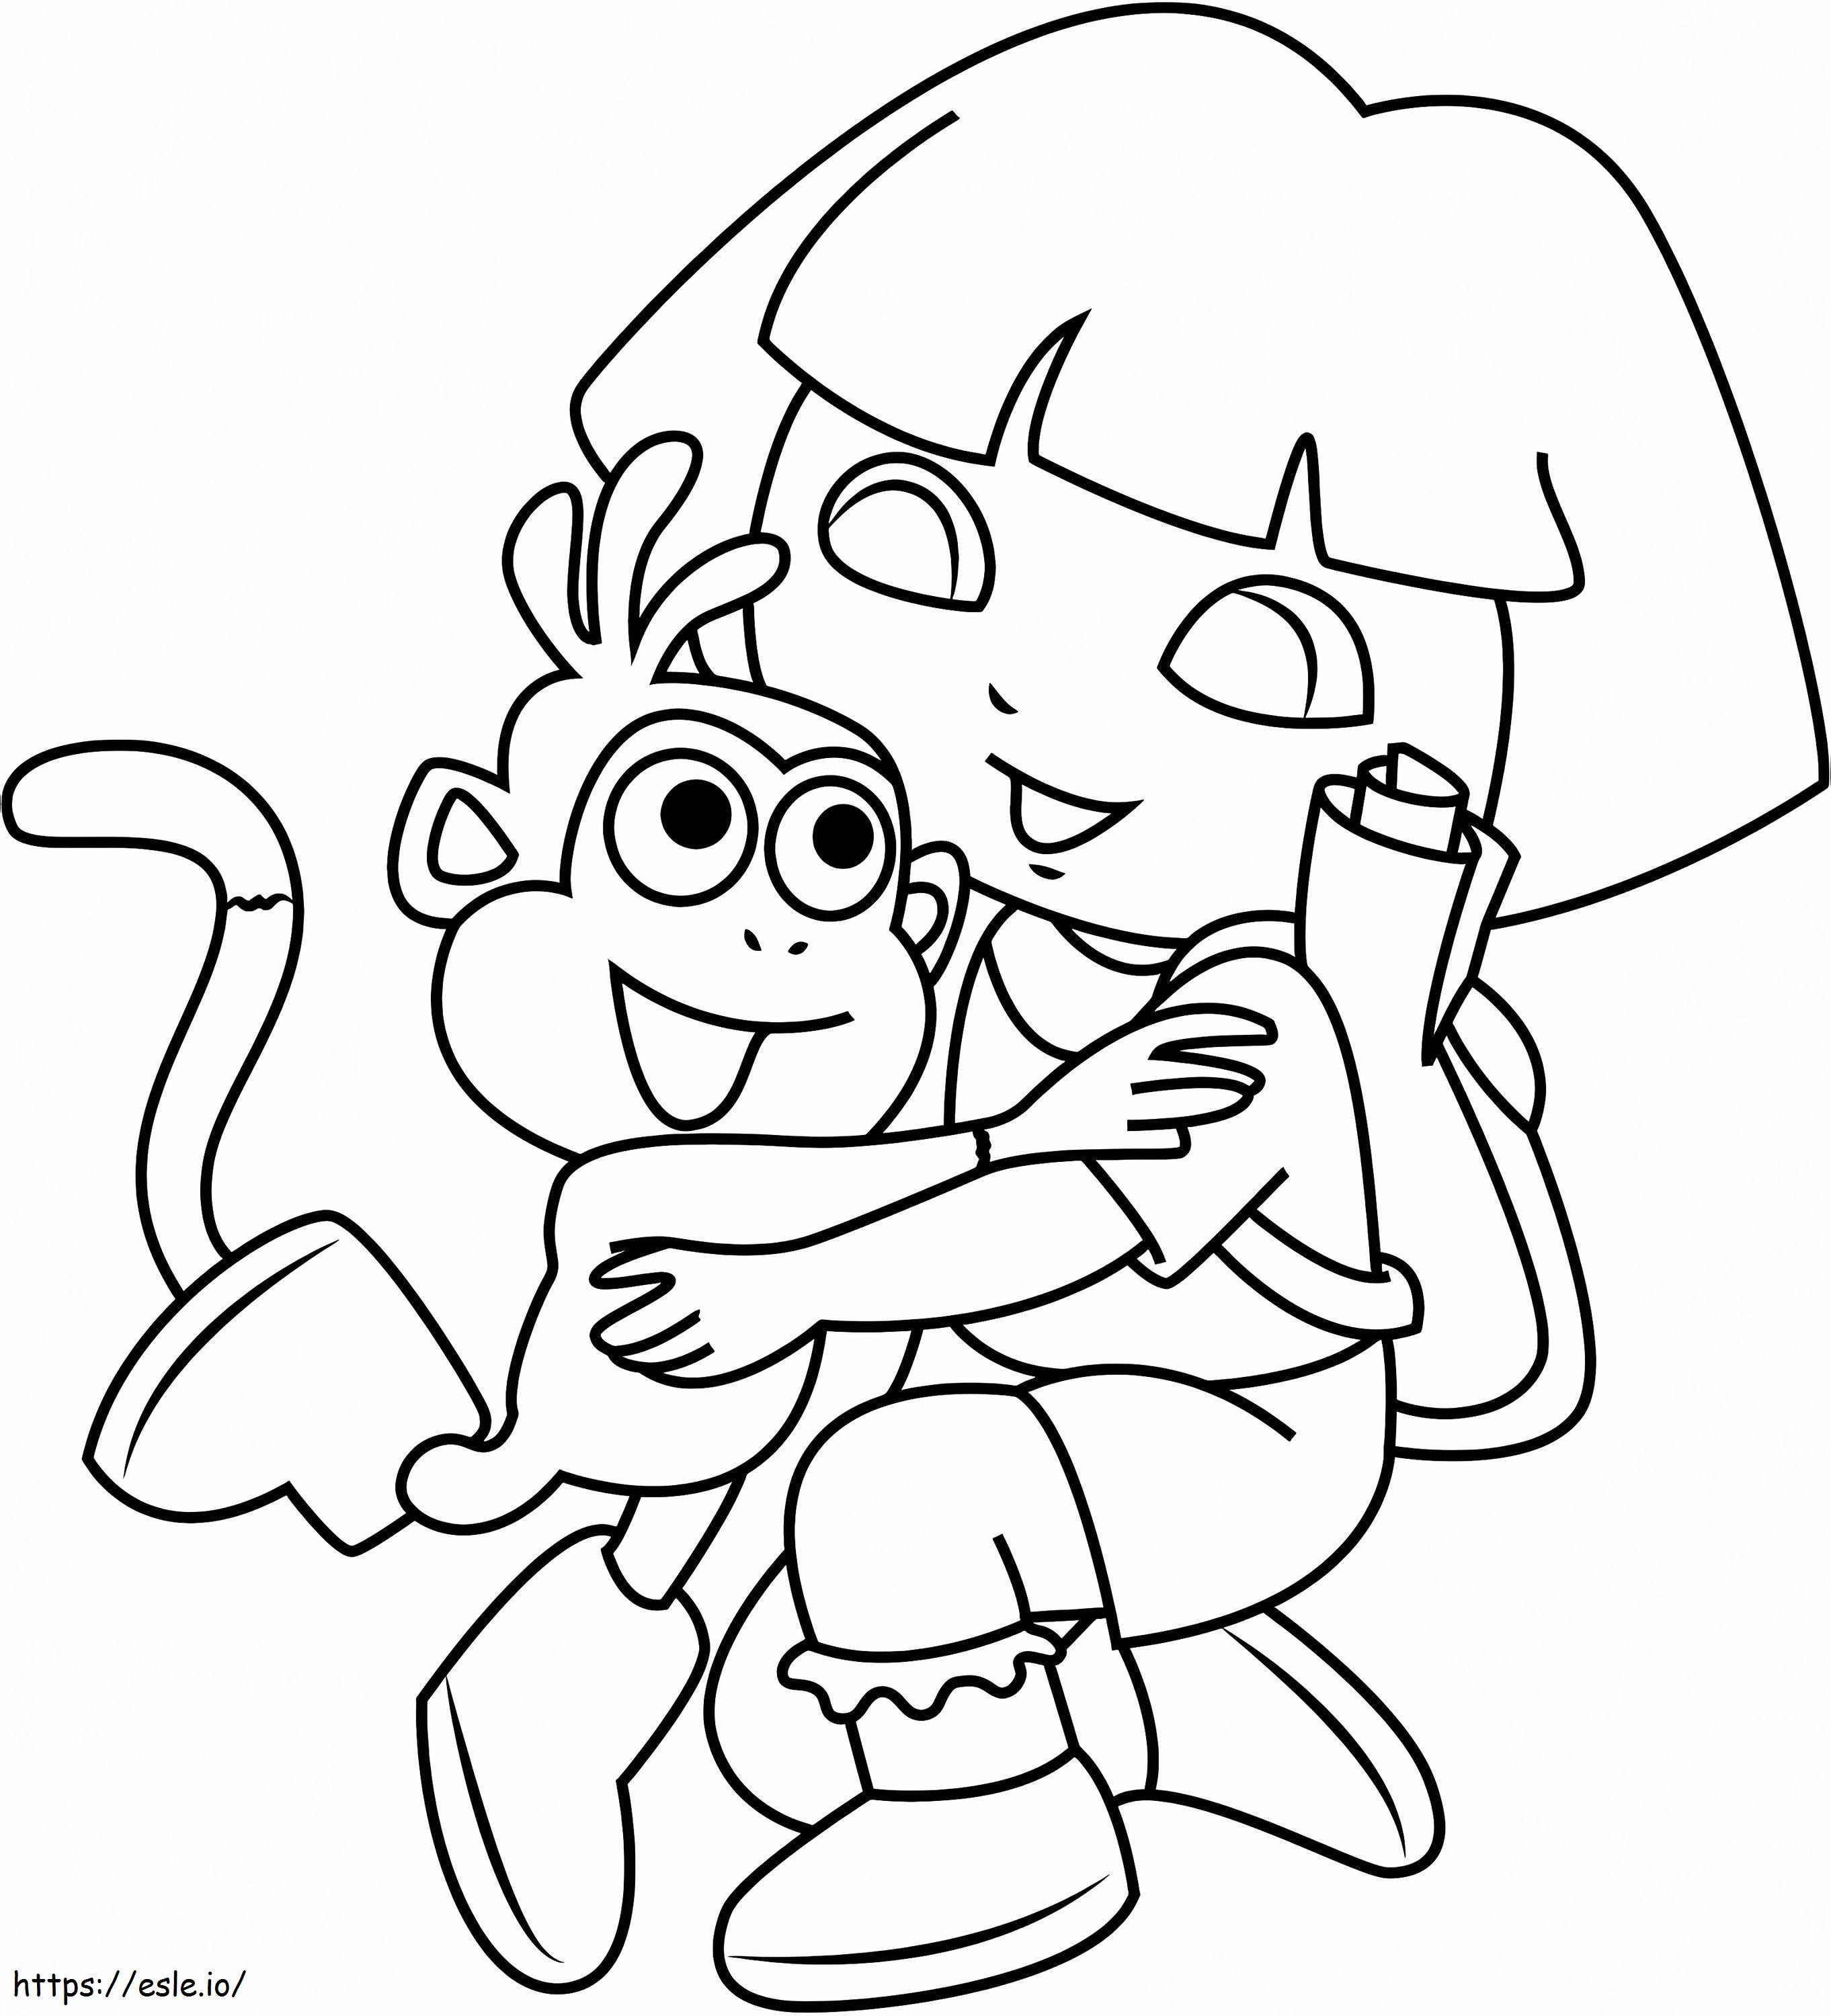 1531187806 Dora Abraçando Macaco A4 para colorir